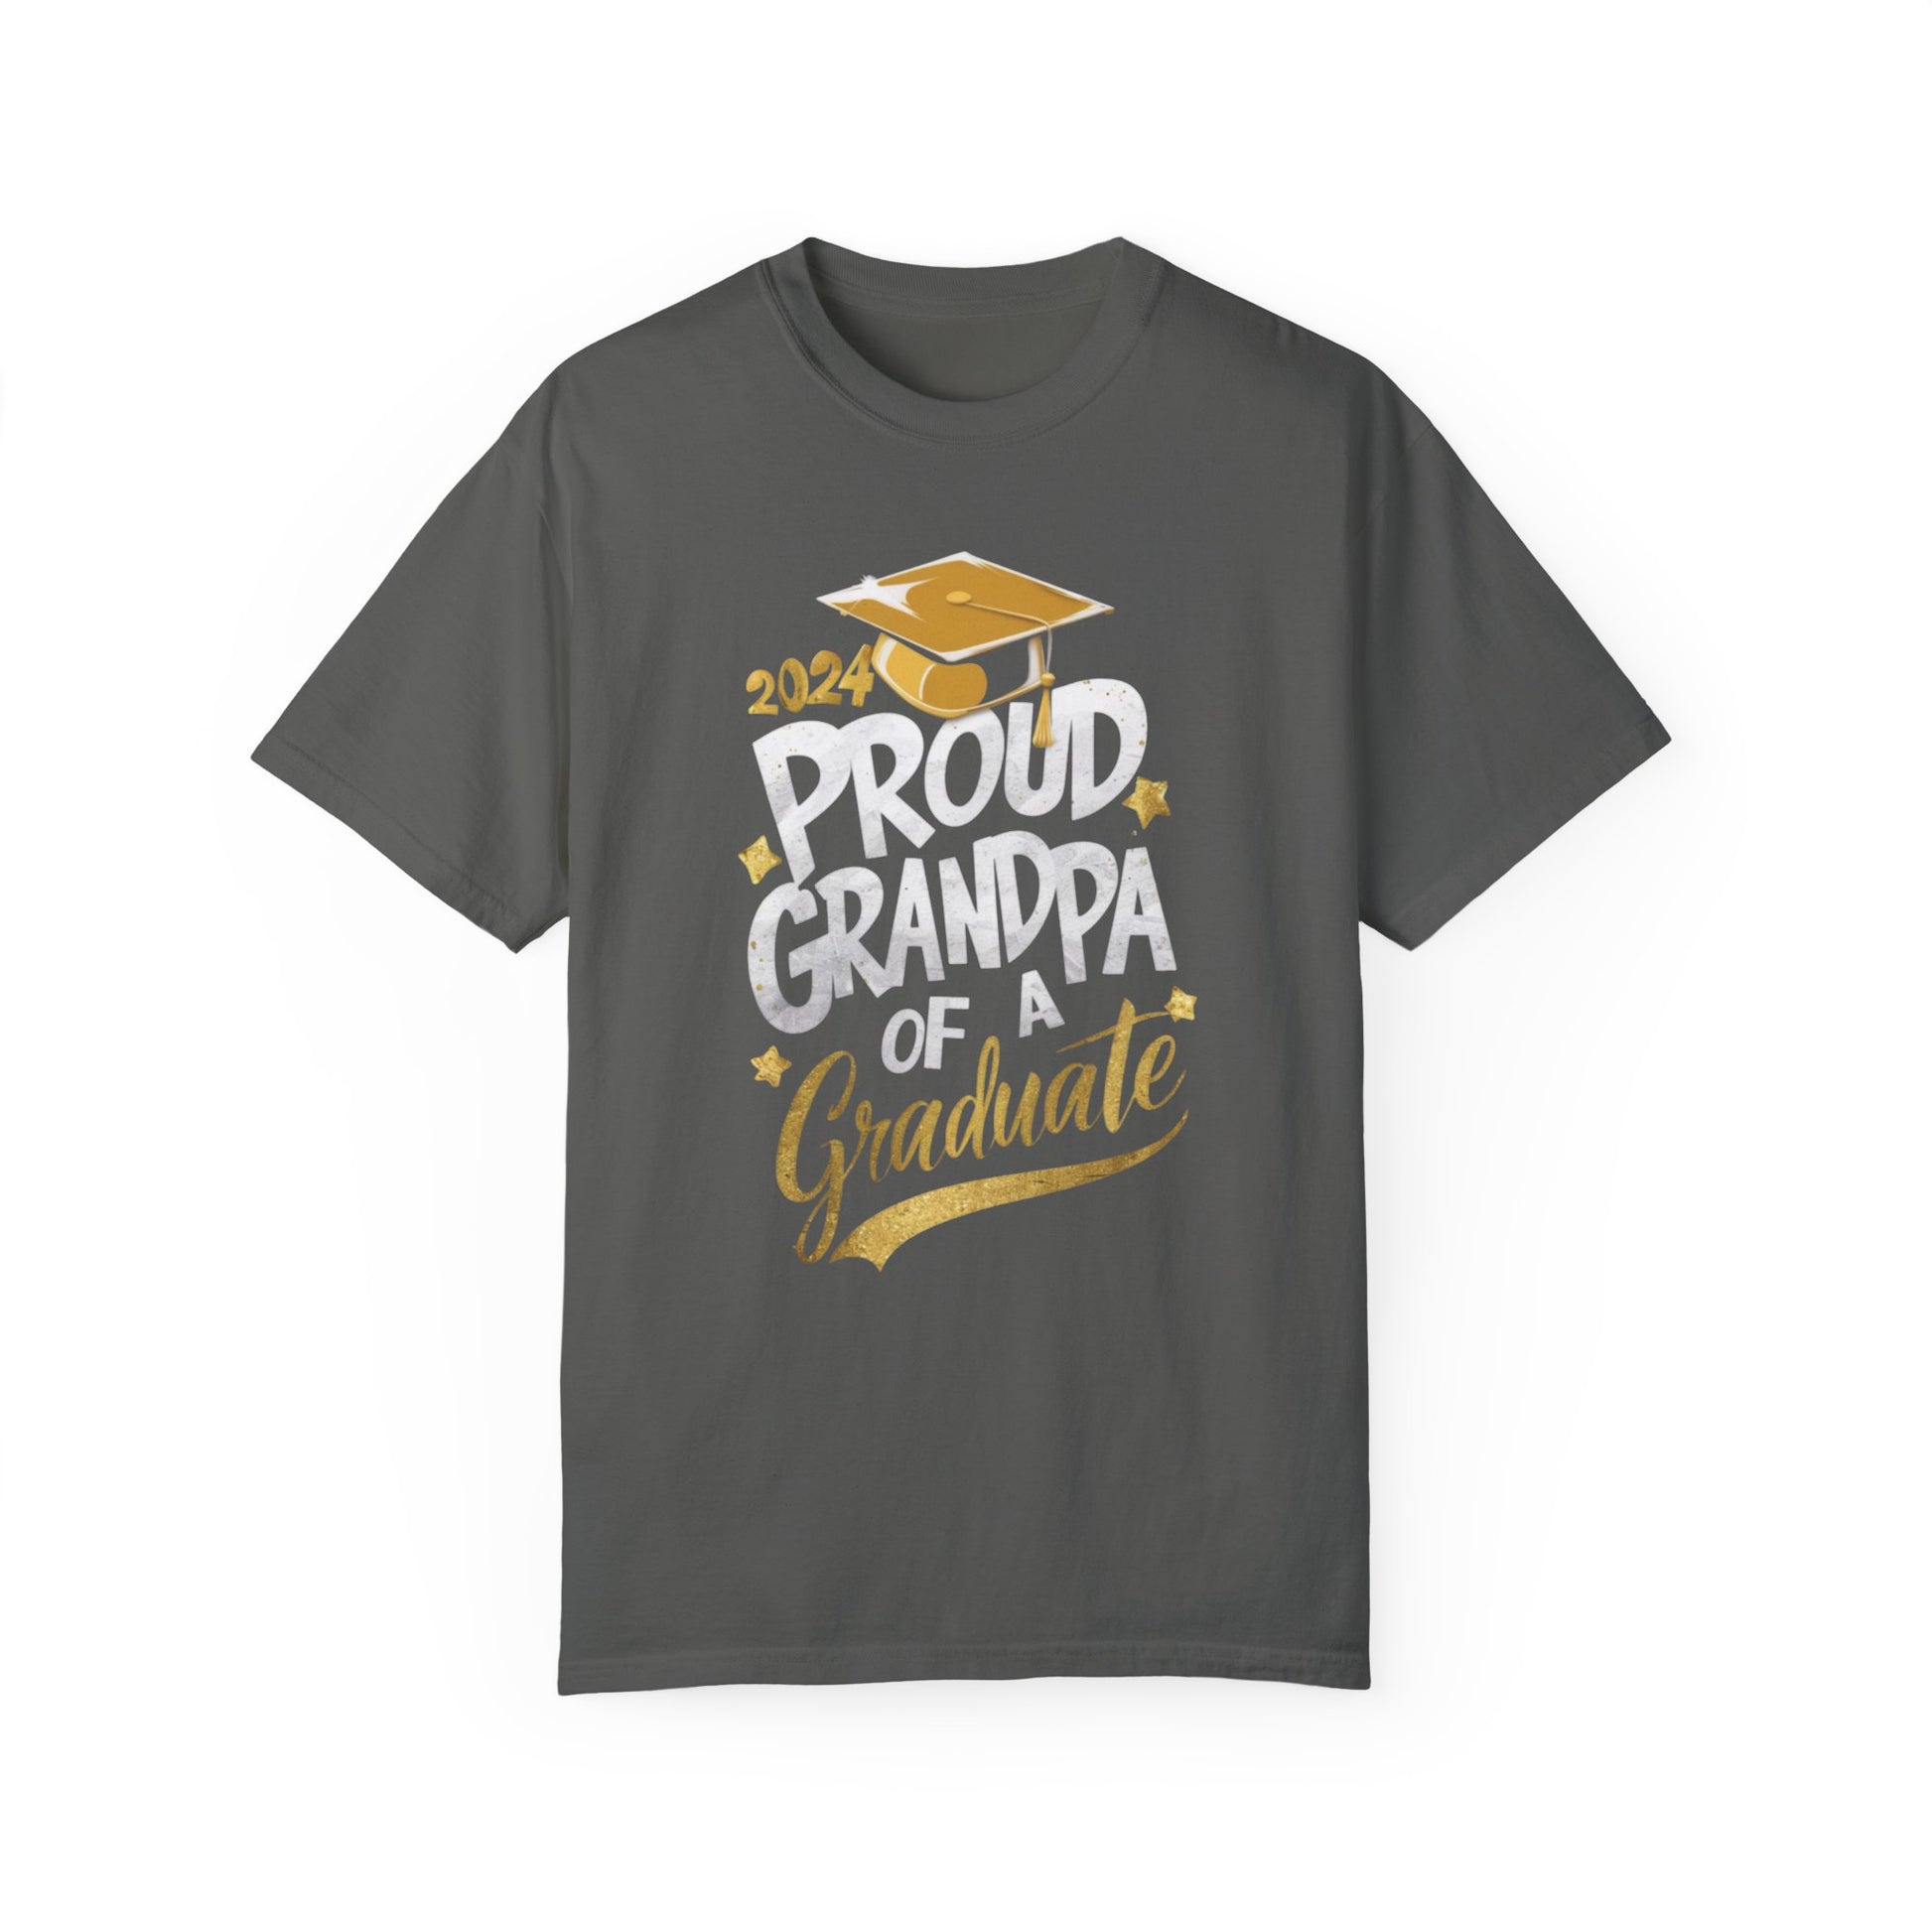 Proud Grandpa of a 2024 Graduate Unisex Garment-dyed T-shirt Cotton Funny Humorous Graphic Soft Premium Unisex Men Women Pepper T-shirt Birthday Gift-12